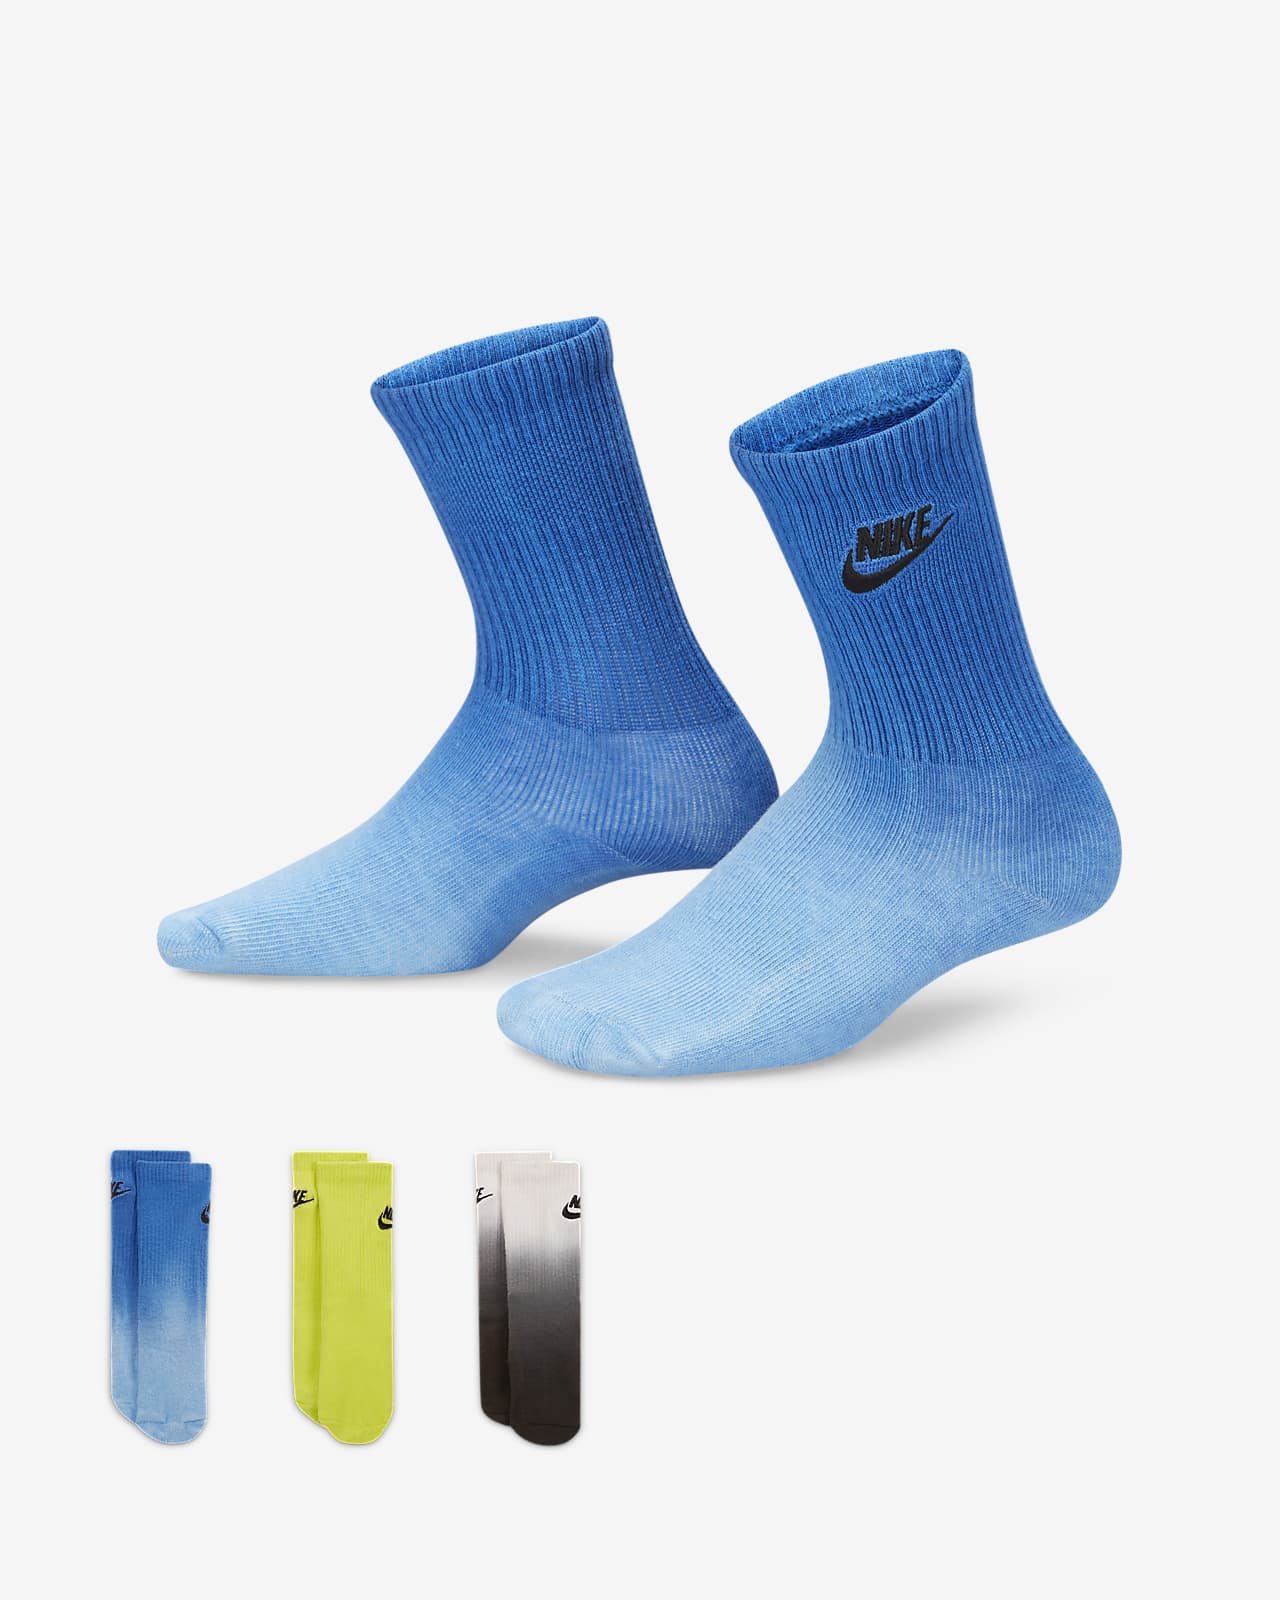 Nike Little Kids' Crew Socks (3-Pack). Nike.com